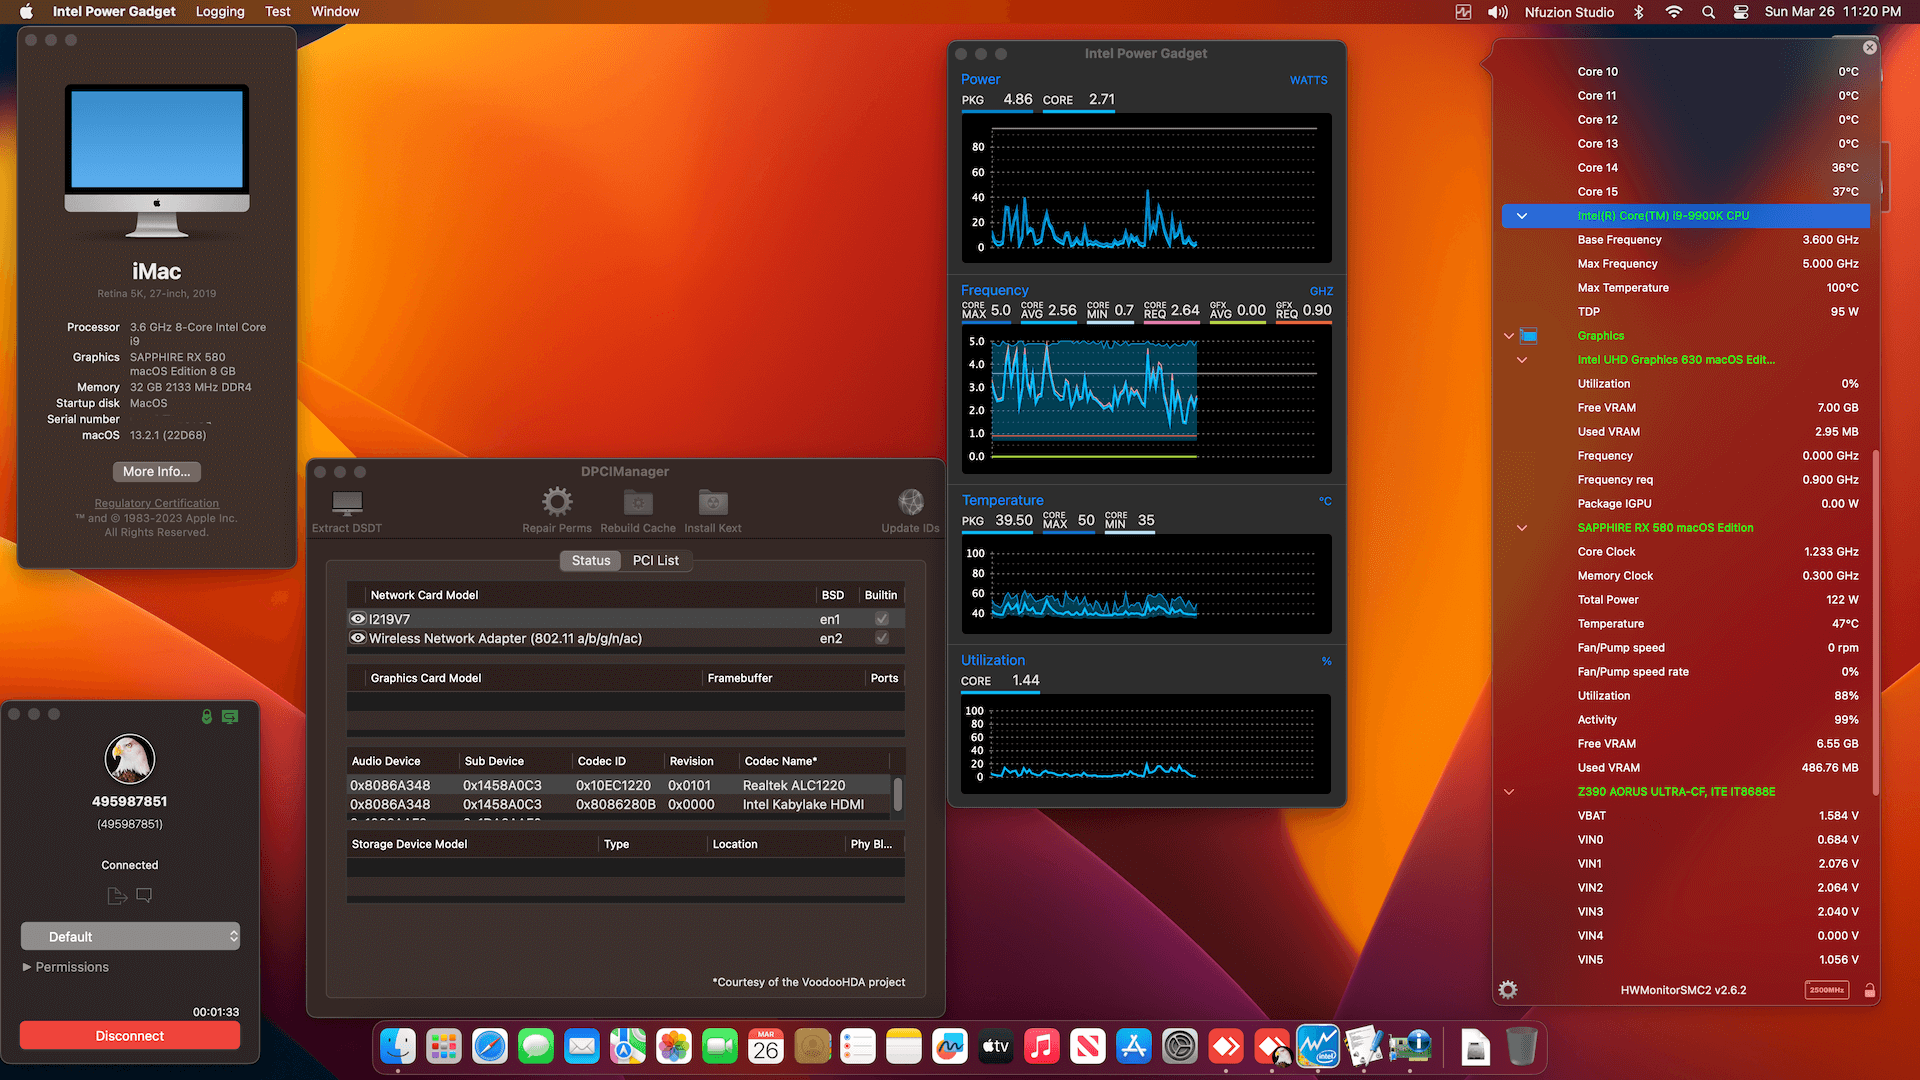 Success Hackintosh macOS Ventura 13.2.1 Build 22D68 in Gigabyte Z390 Aorus Ultra + Intel Core i9 9900K + Sapphire RX 580